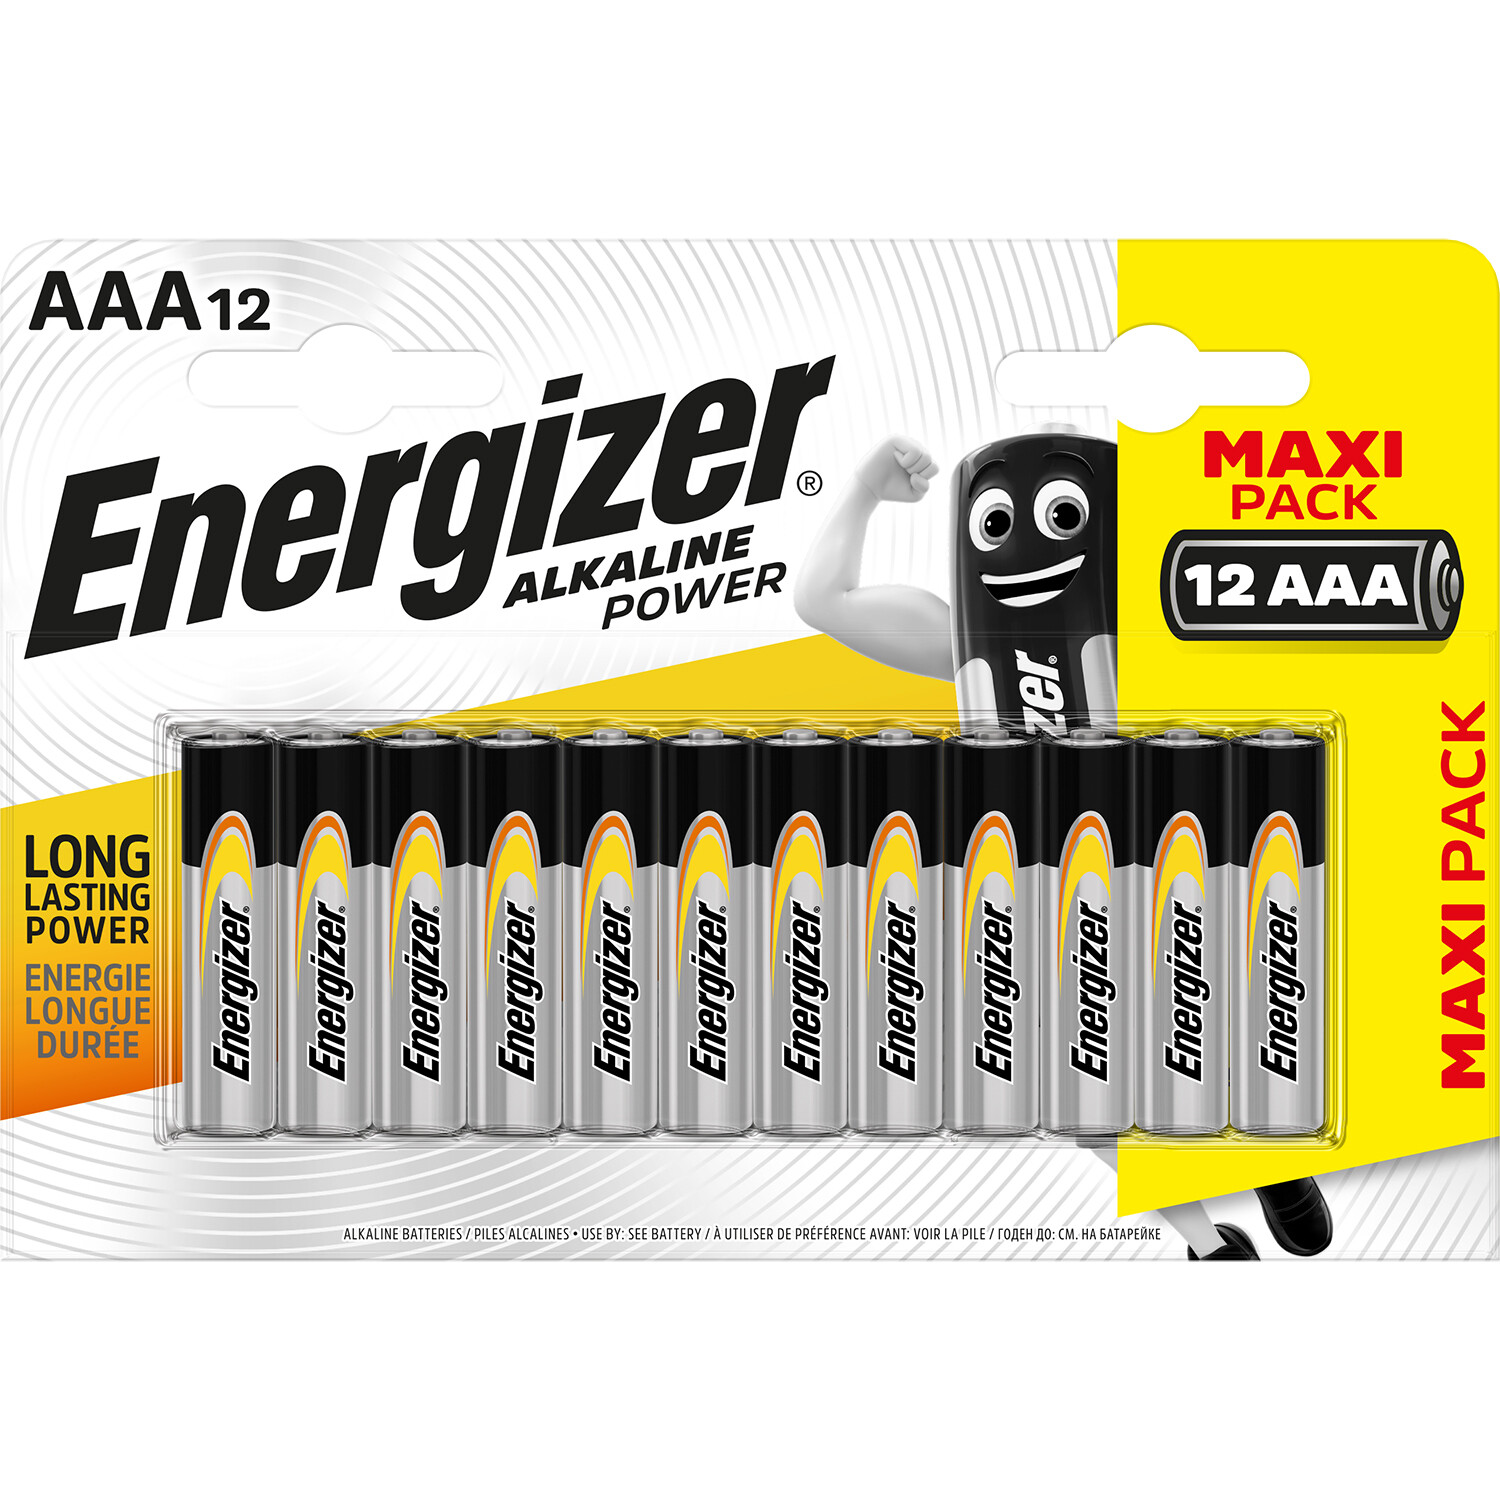 Energizer® Electronic Batteries - CR1620 UK